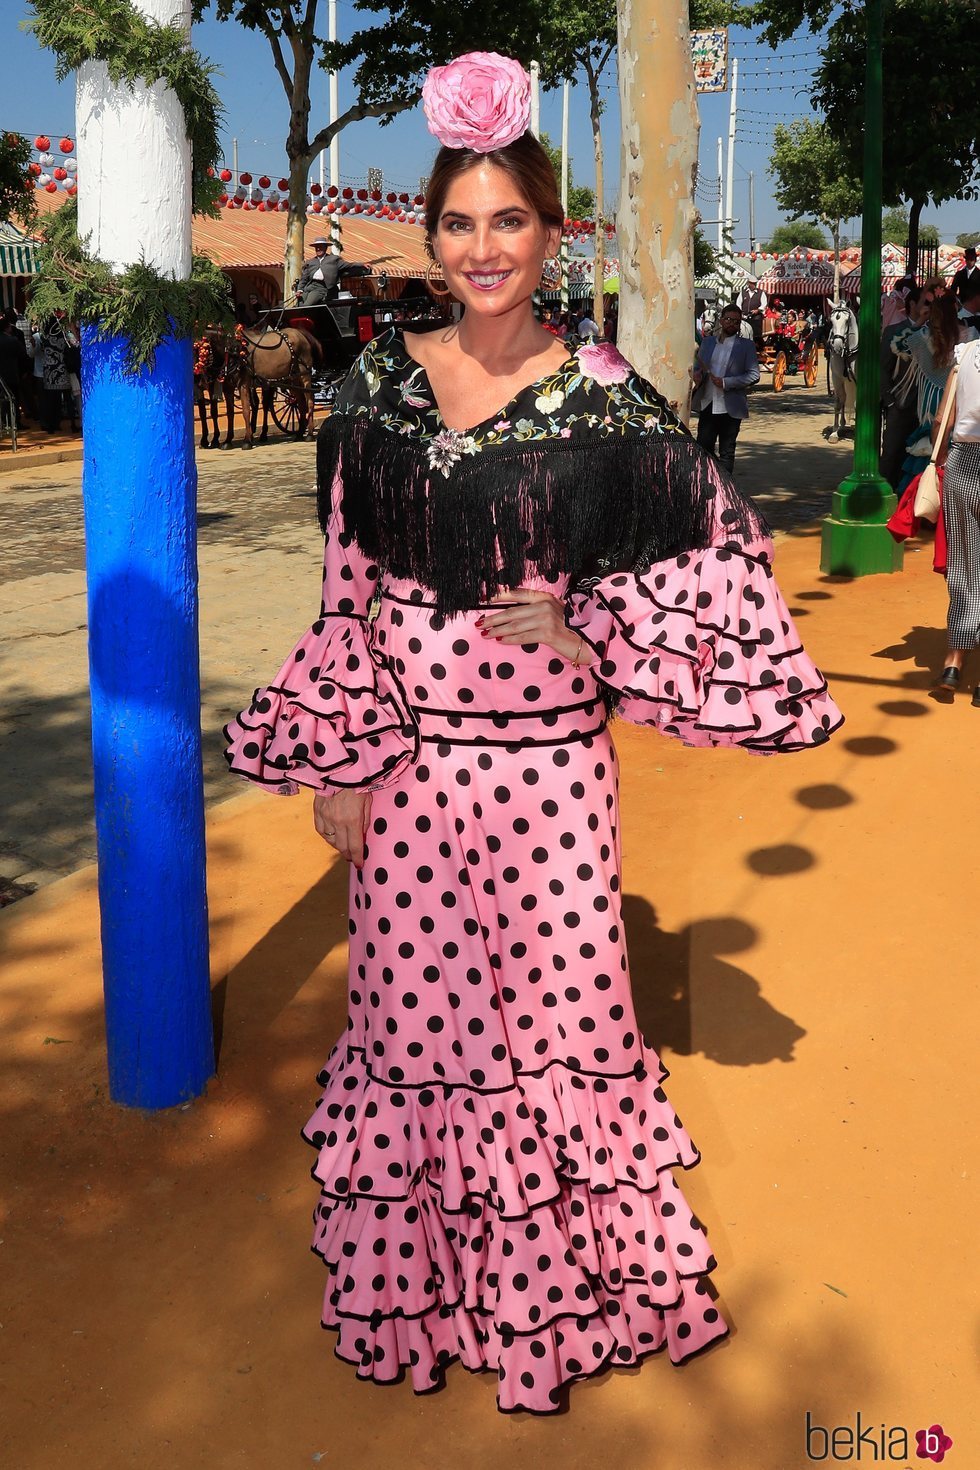 Lourdes Montes en la primera jornada de la Feria de Abril 2019